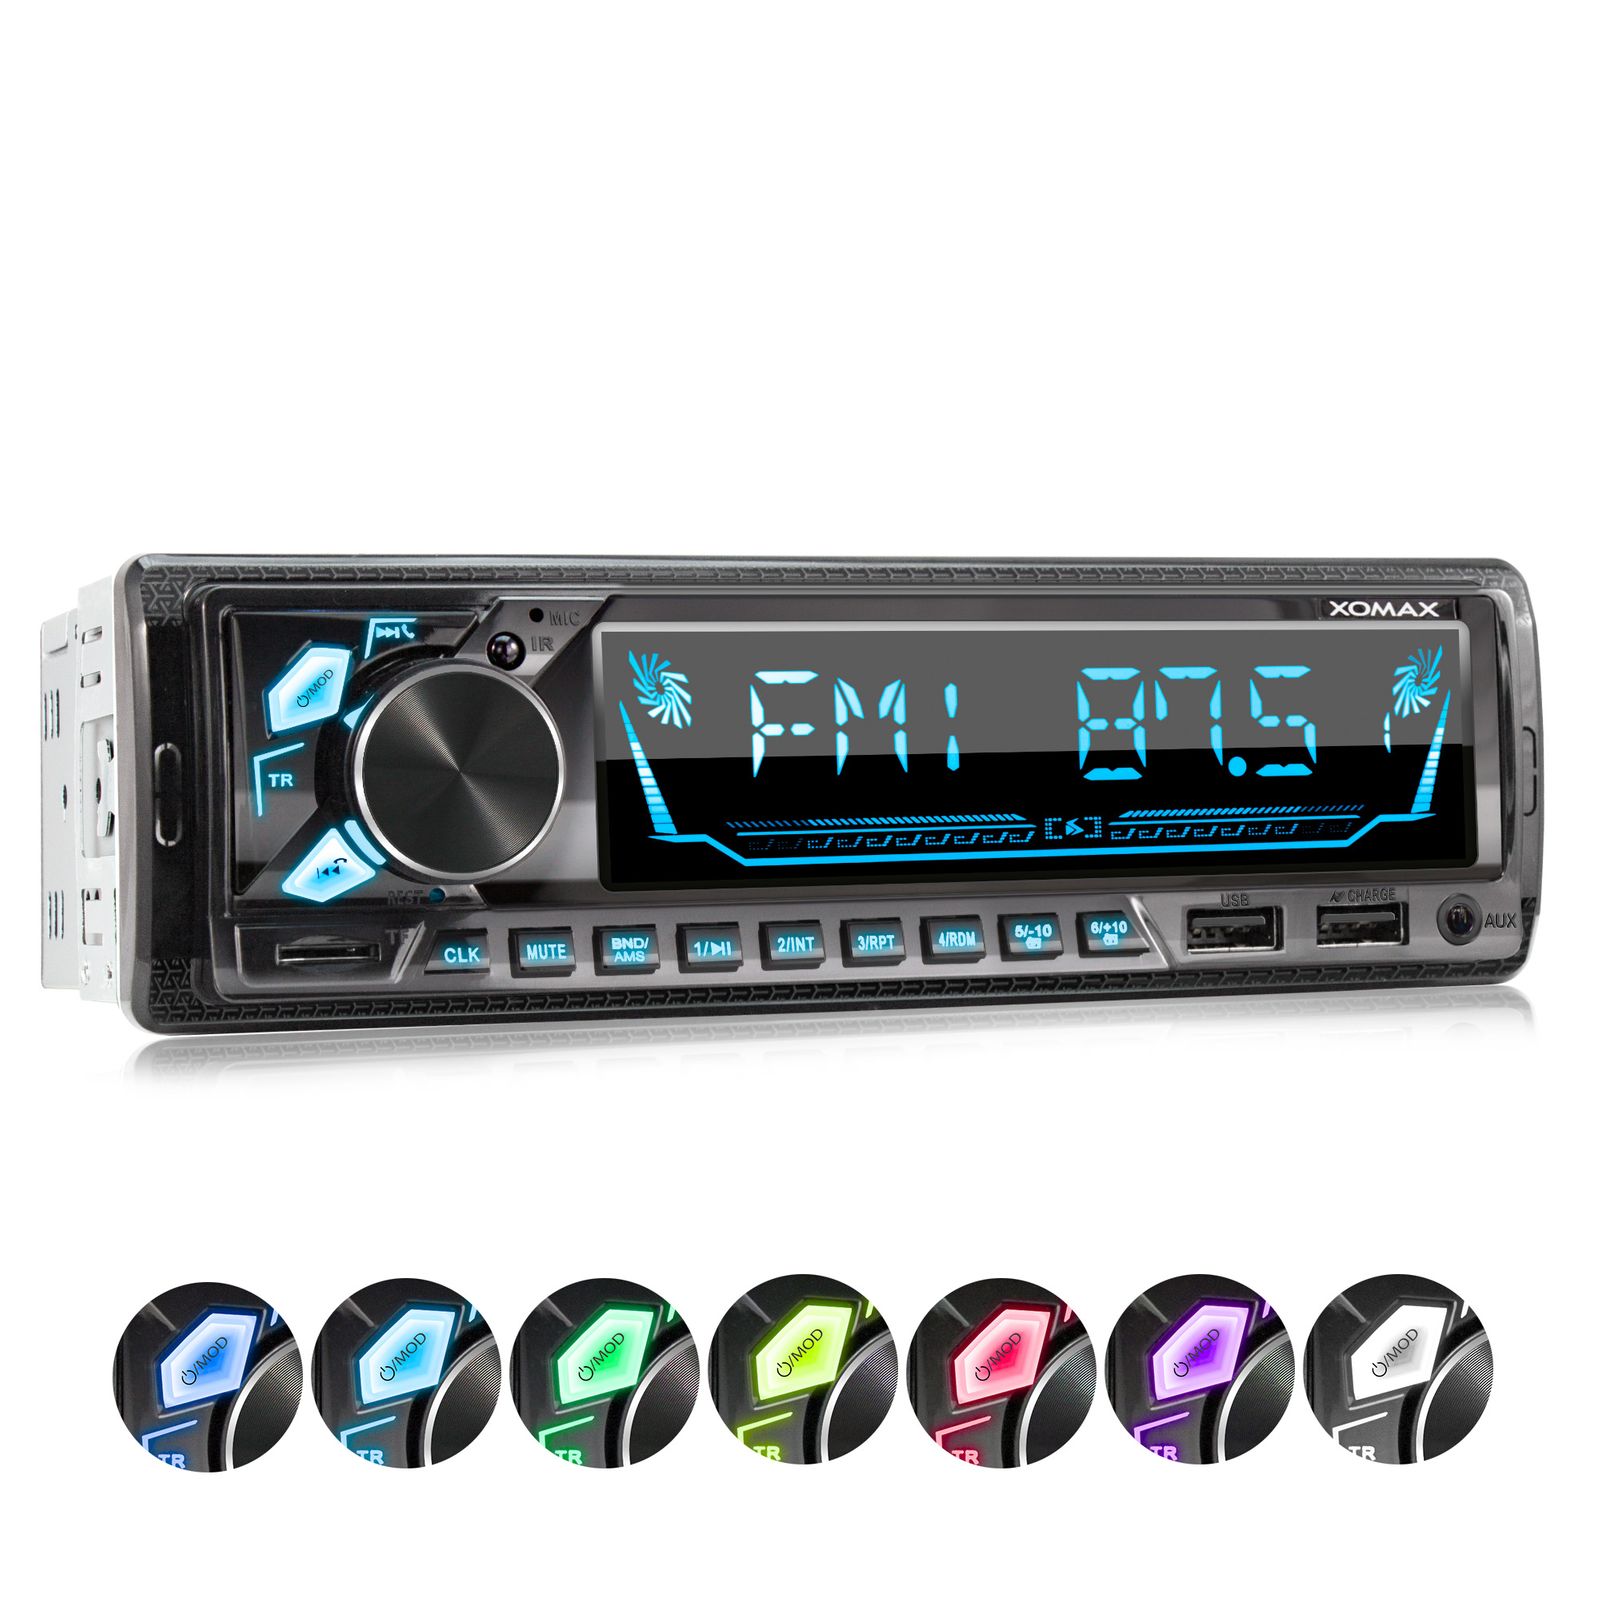 Autoradio mit Bluetooth 5.0 Avylet Carplay